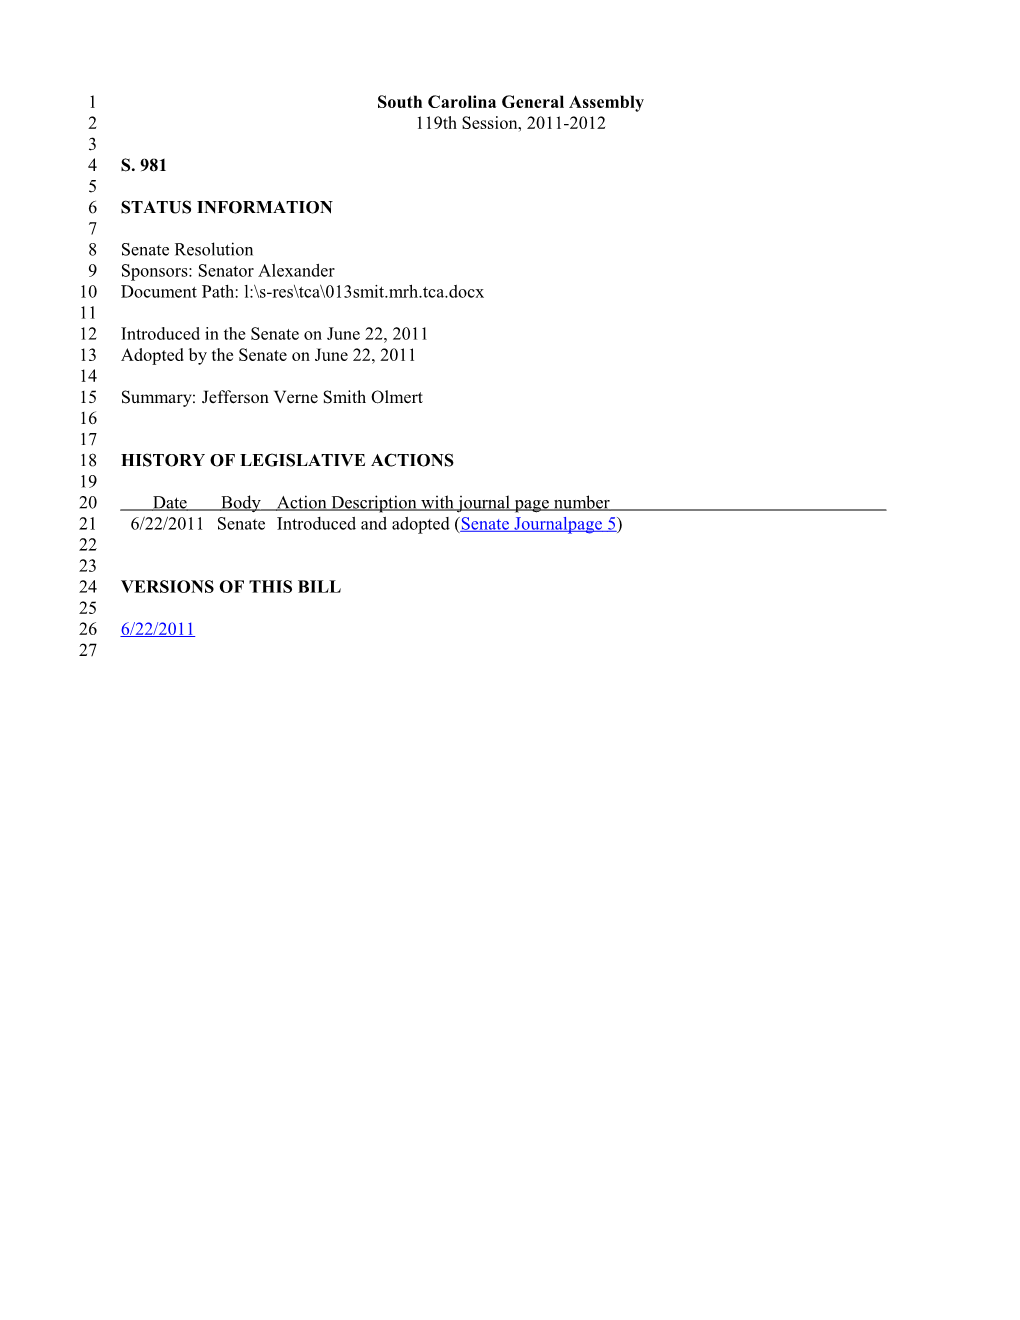 2011-2012 Bill 981: Jefferson Verne Smith Olmert - South Carolina Legislature Online